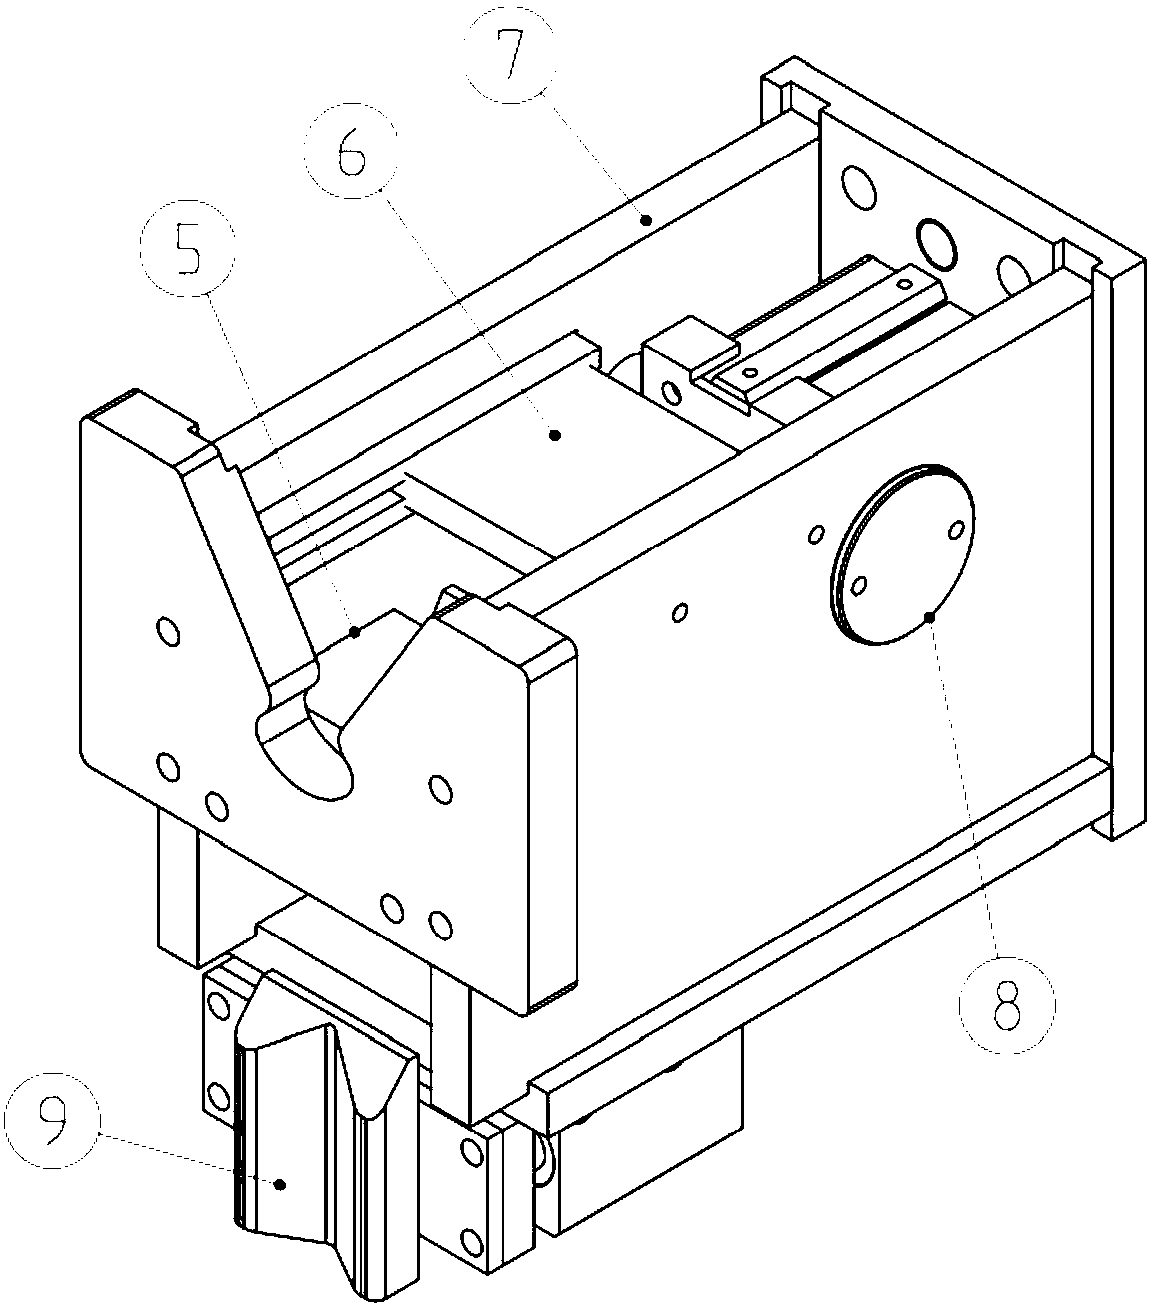 Cathode bending separation device